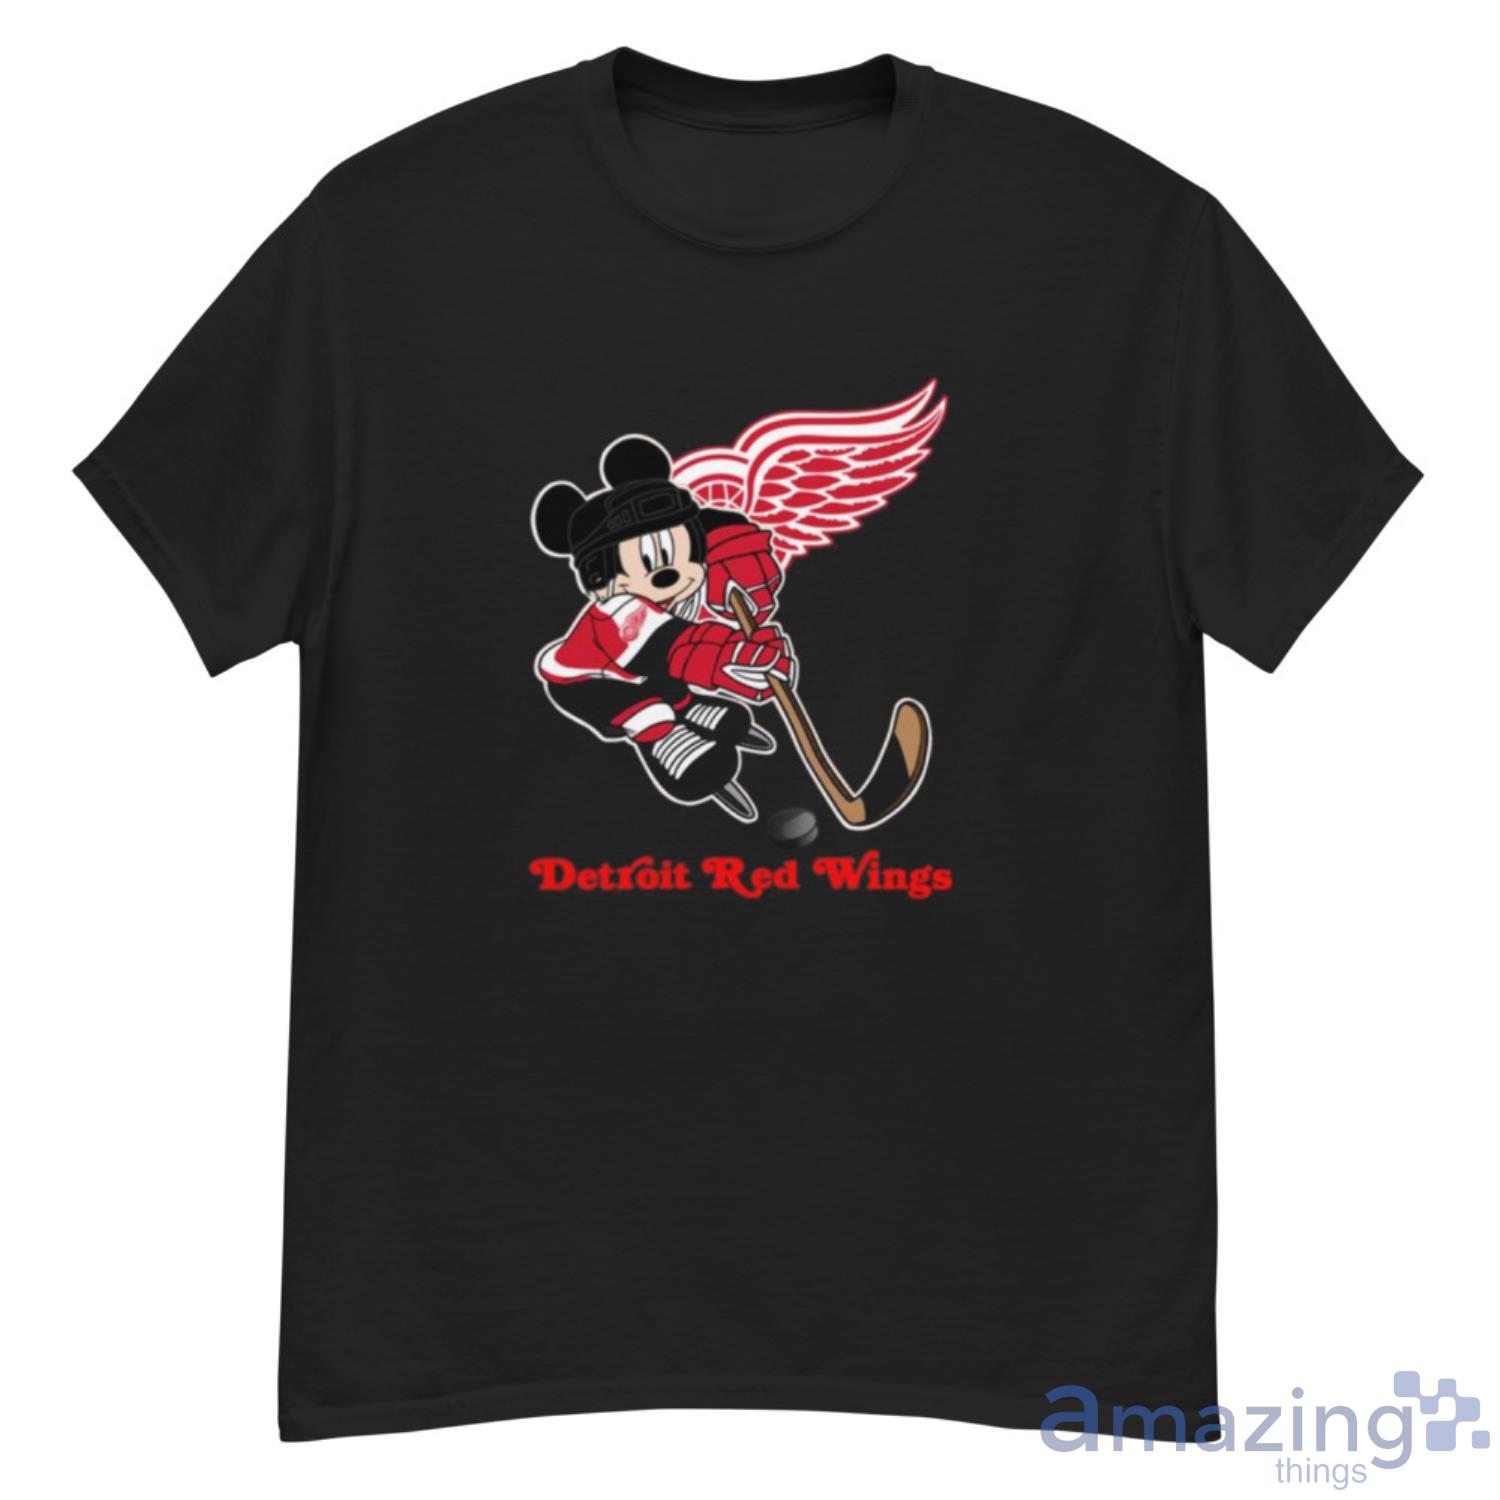 Vintage 90s Detroit Red Wings Logo 7 Graphic T-Shirt NHL Hockey Sz